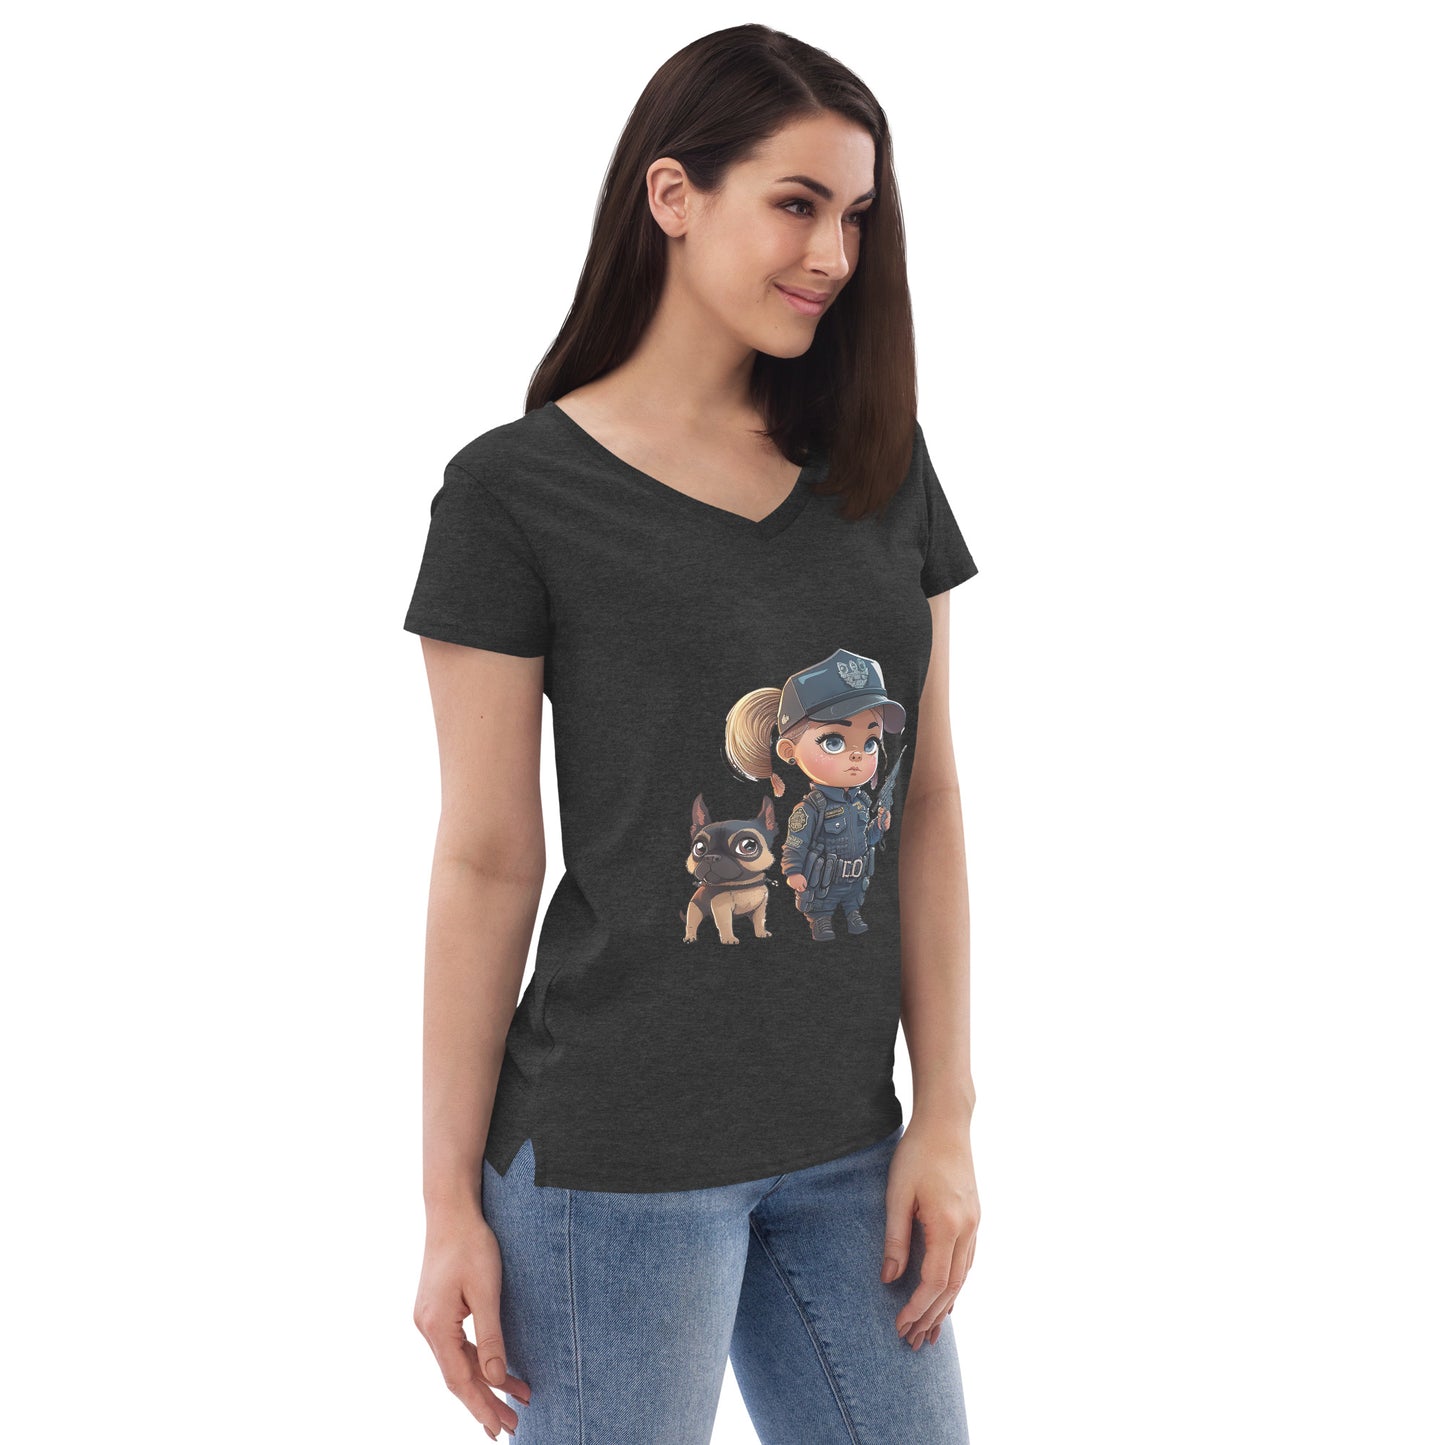 Mini Justice & Barkley Women’s recycled v-neck t-shirt